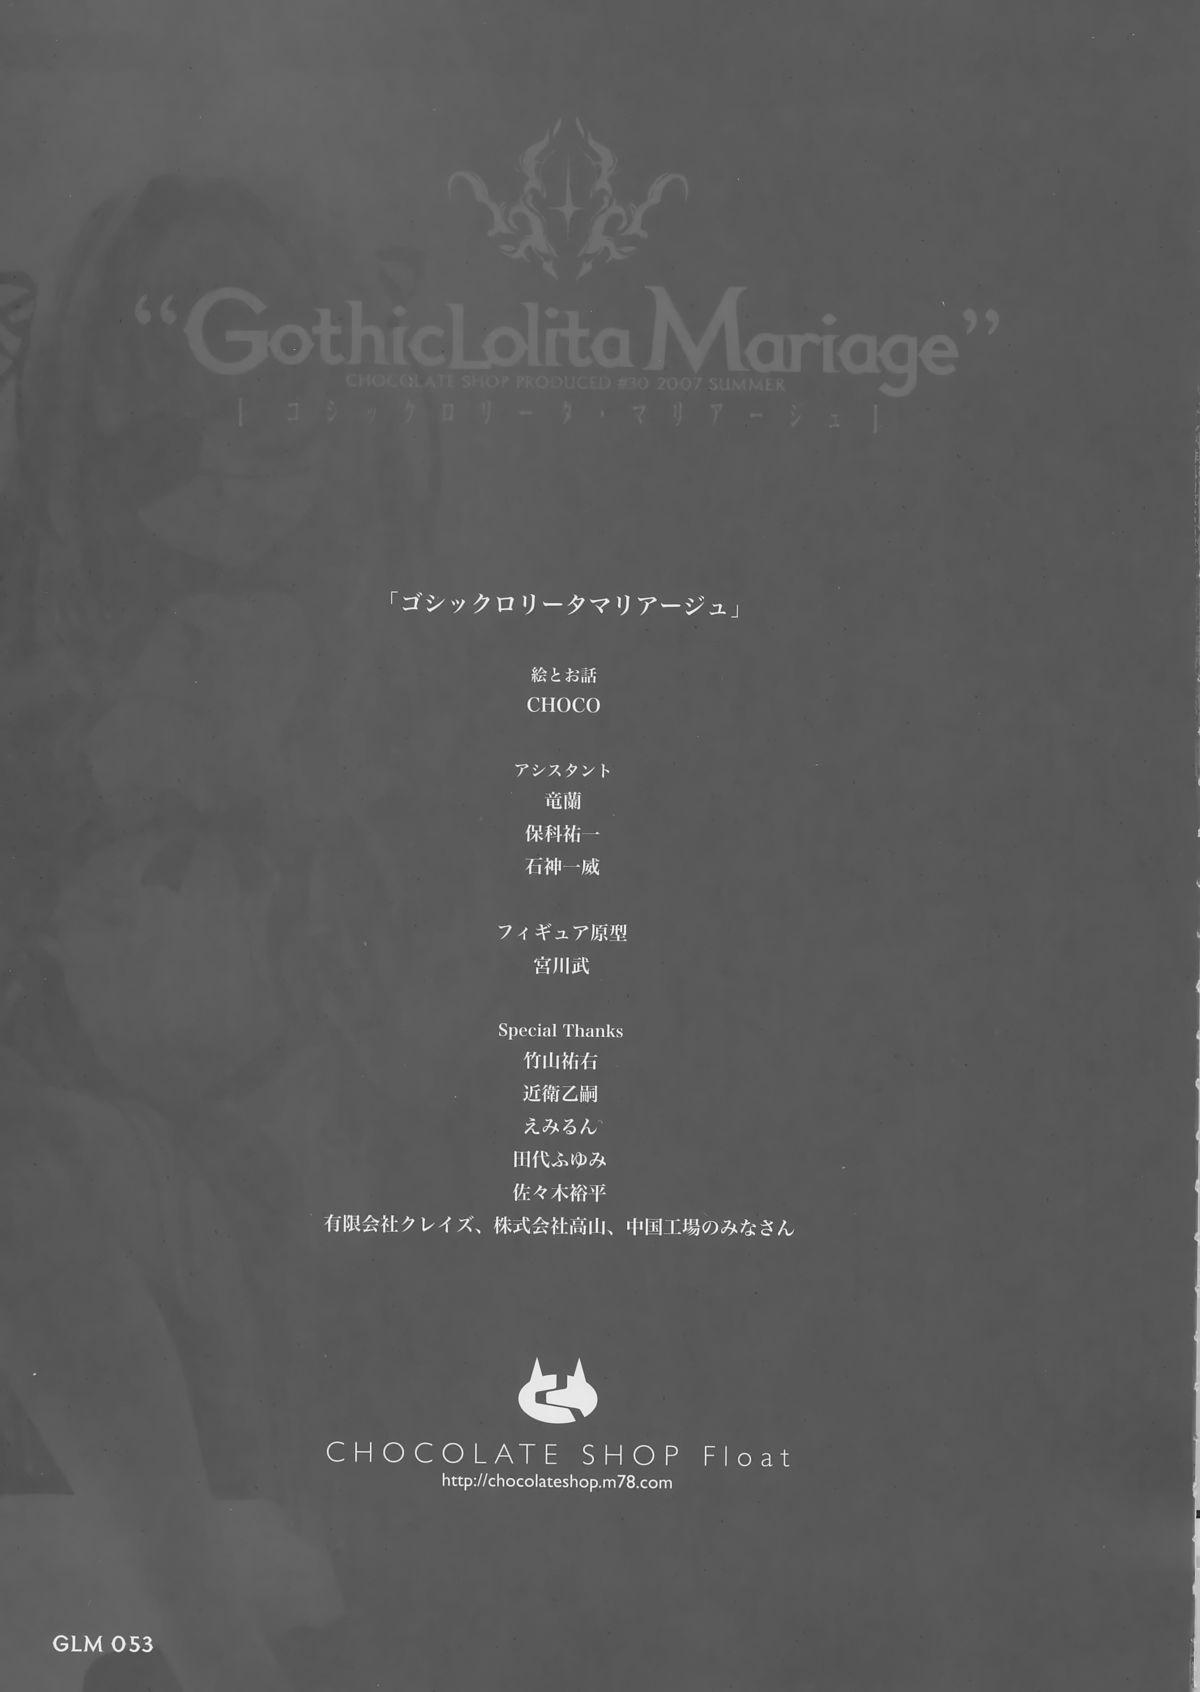 "Gothic Lolita Mariage" 50